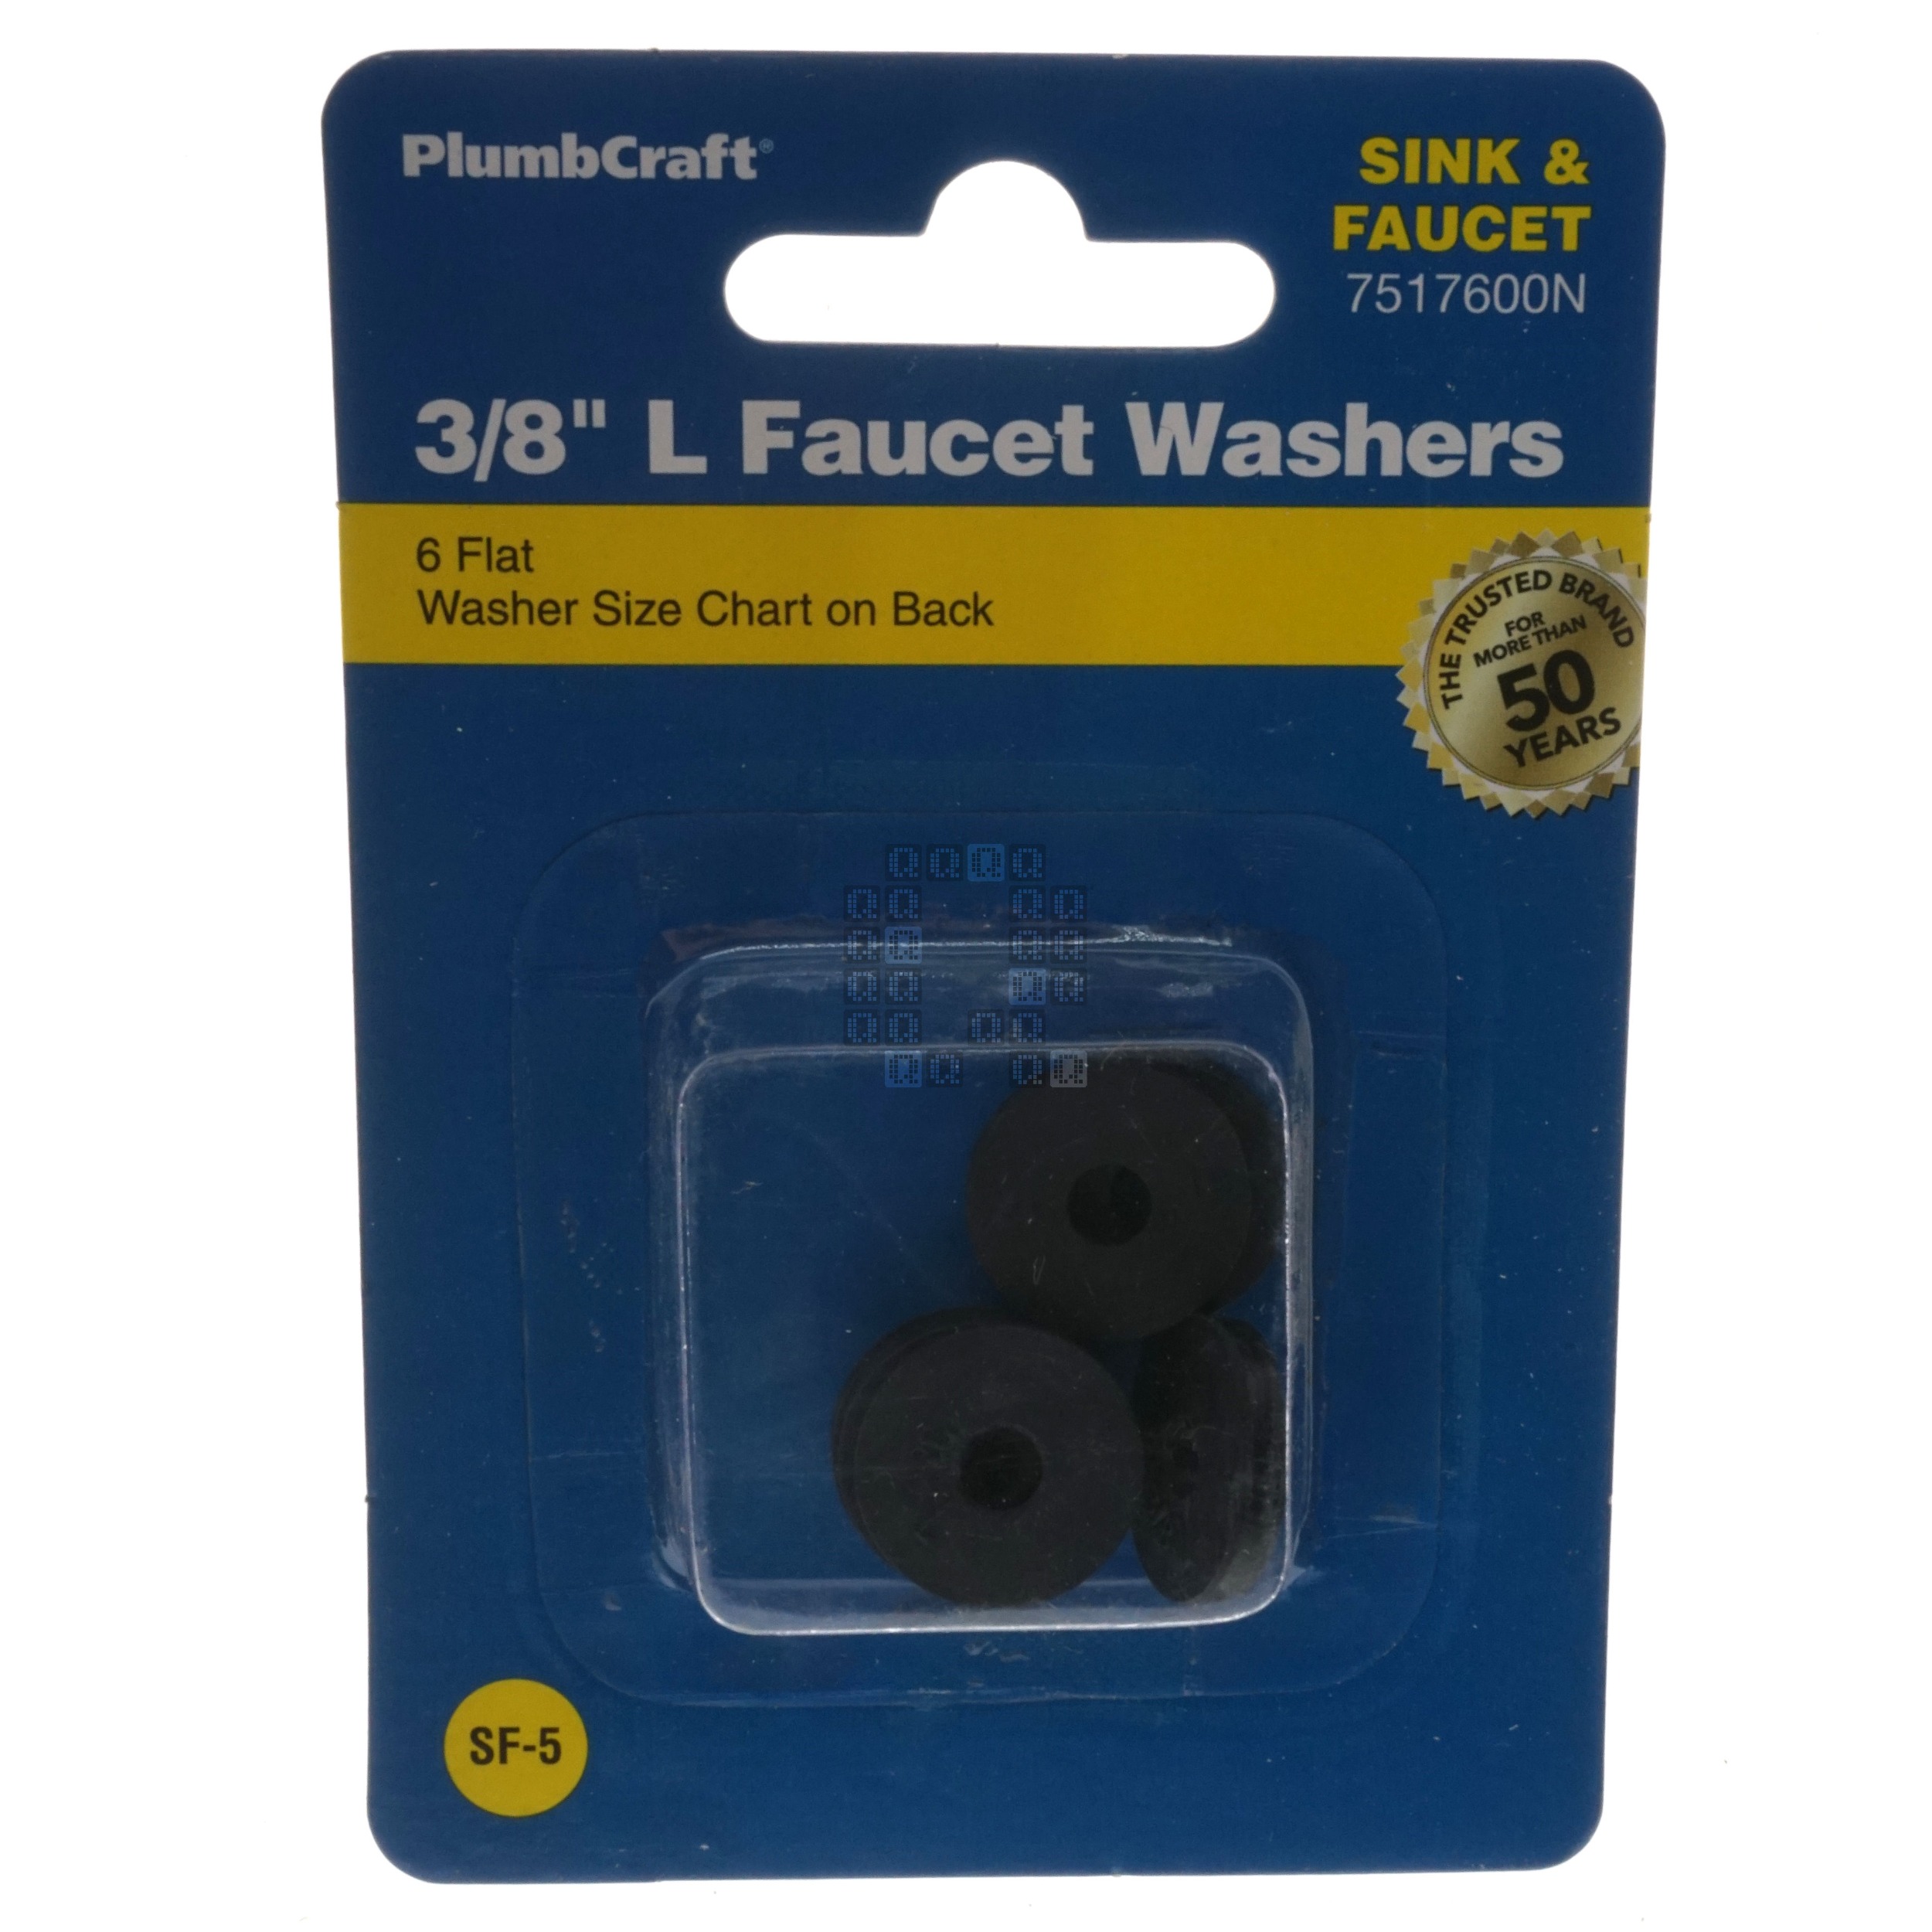 PlumbCraft 7517600N 3/8" L Flat Faucet Washers, 6-Pack